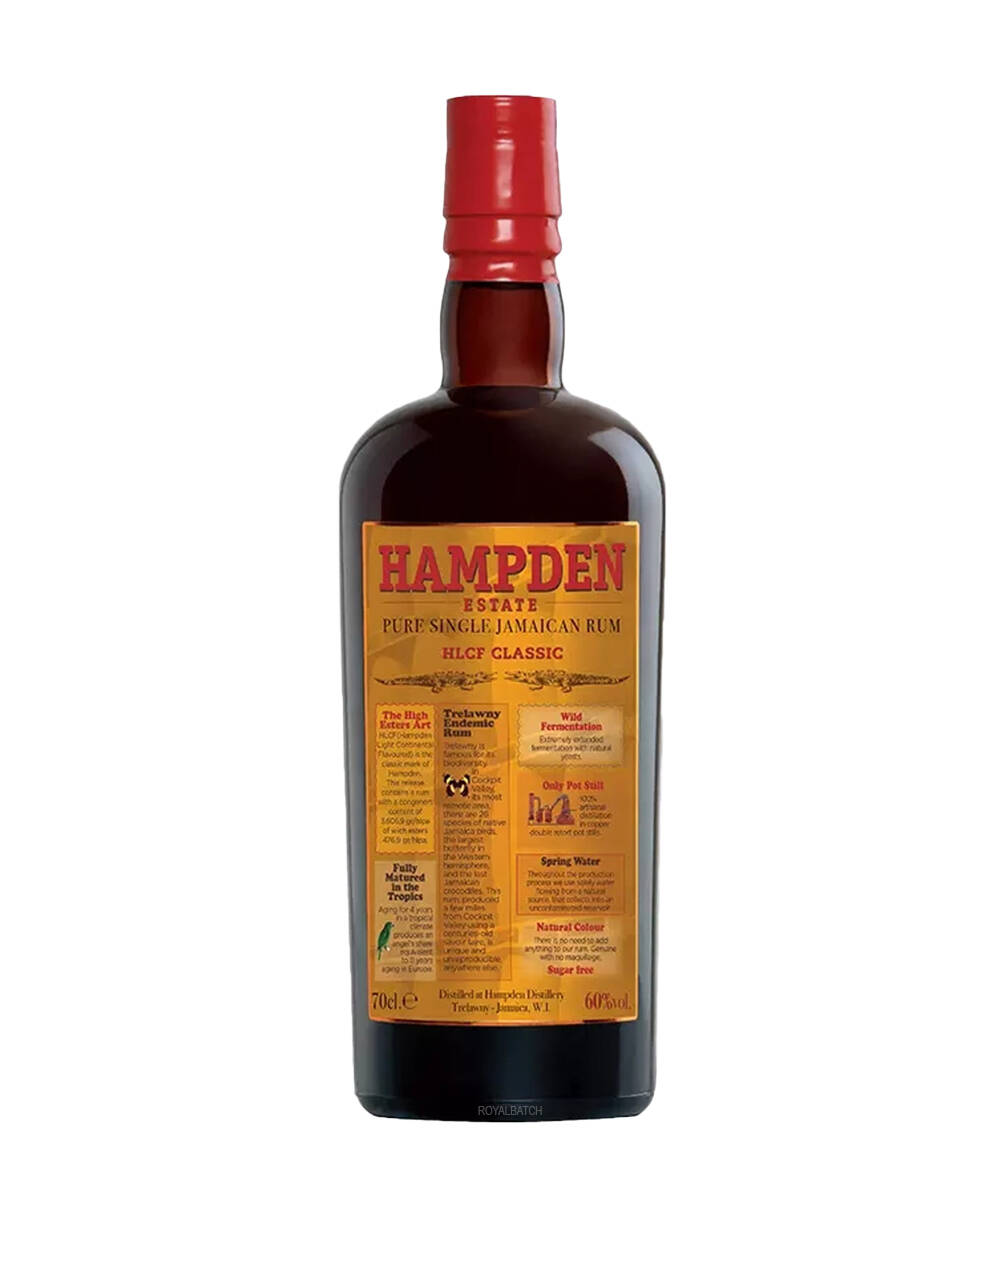 Hampden Estate HLCF Classic Pure Single Jamaican Rum